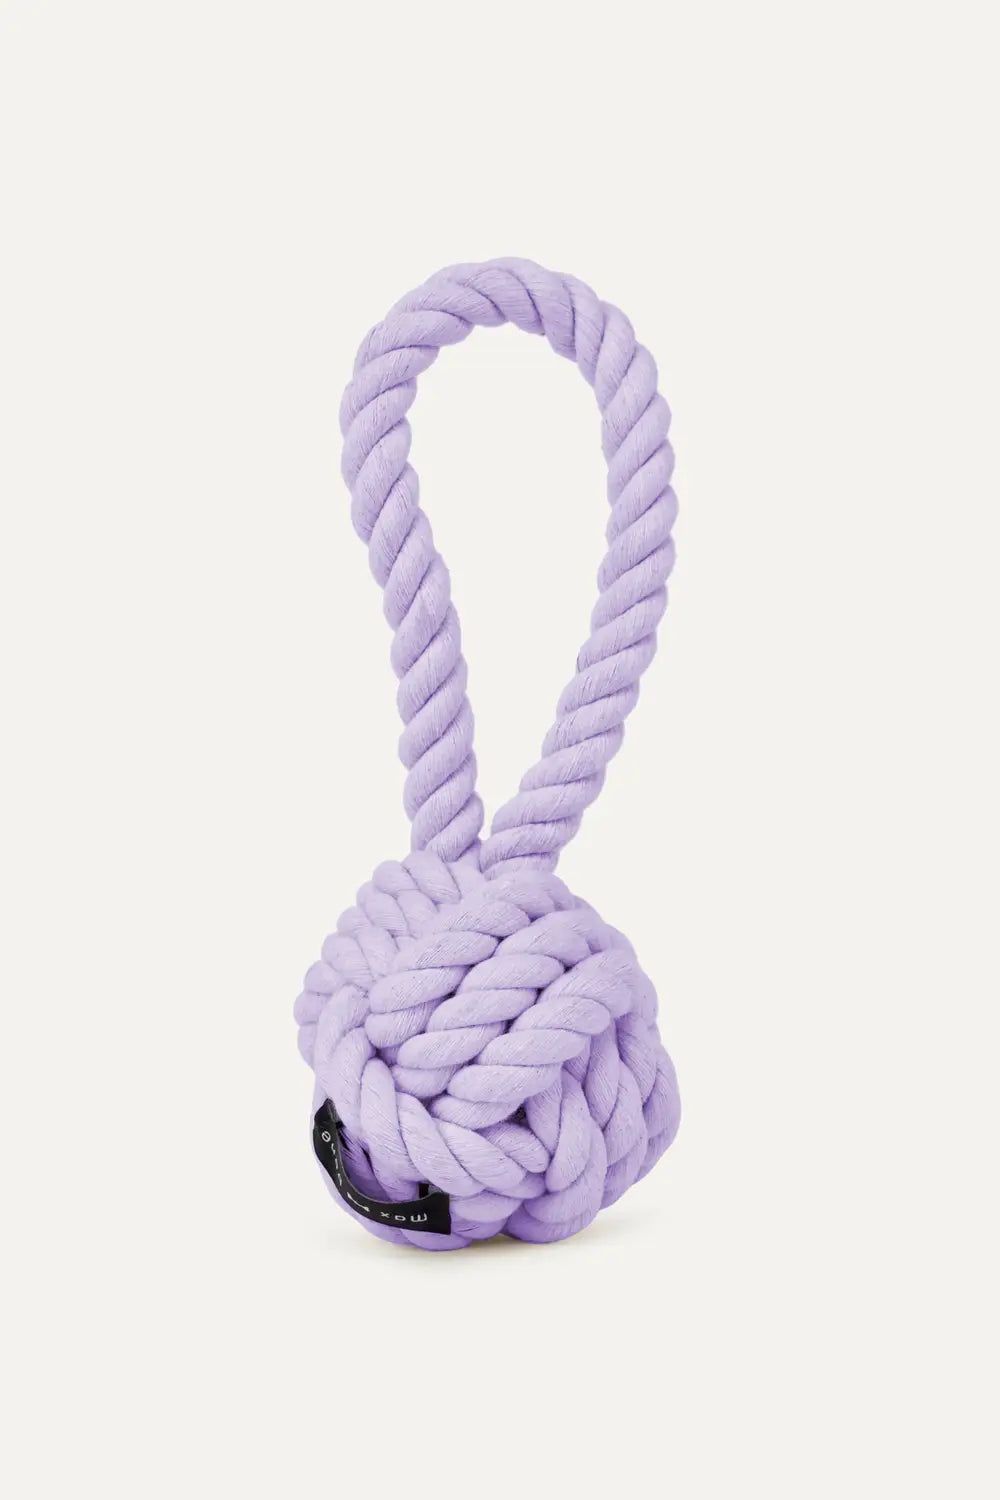 Lavendel -Seilspielzeug